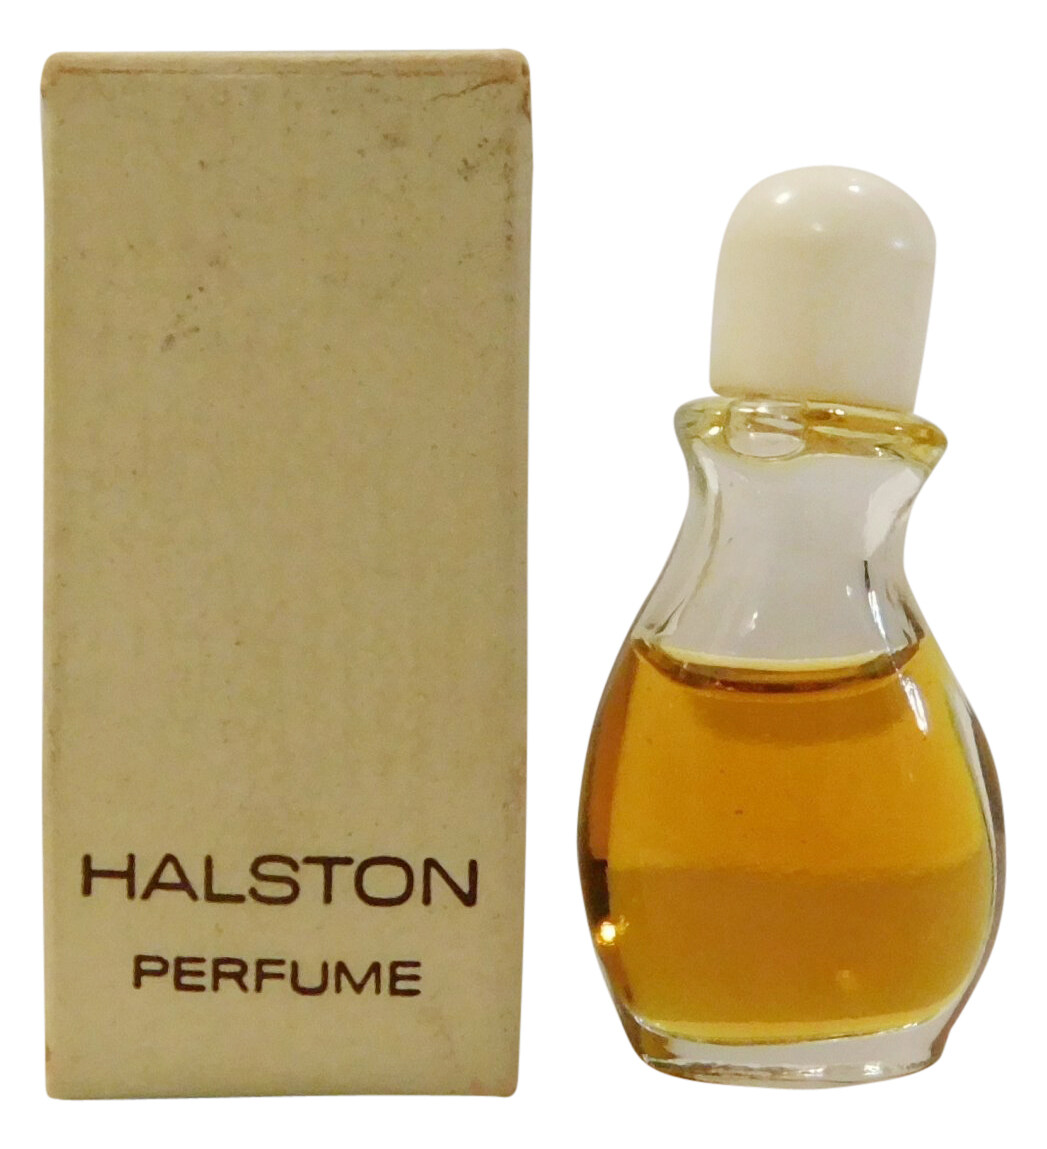 Halston - Perfume (Perfume) » Reviews & Perfume Facts